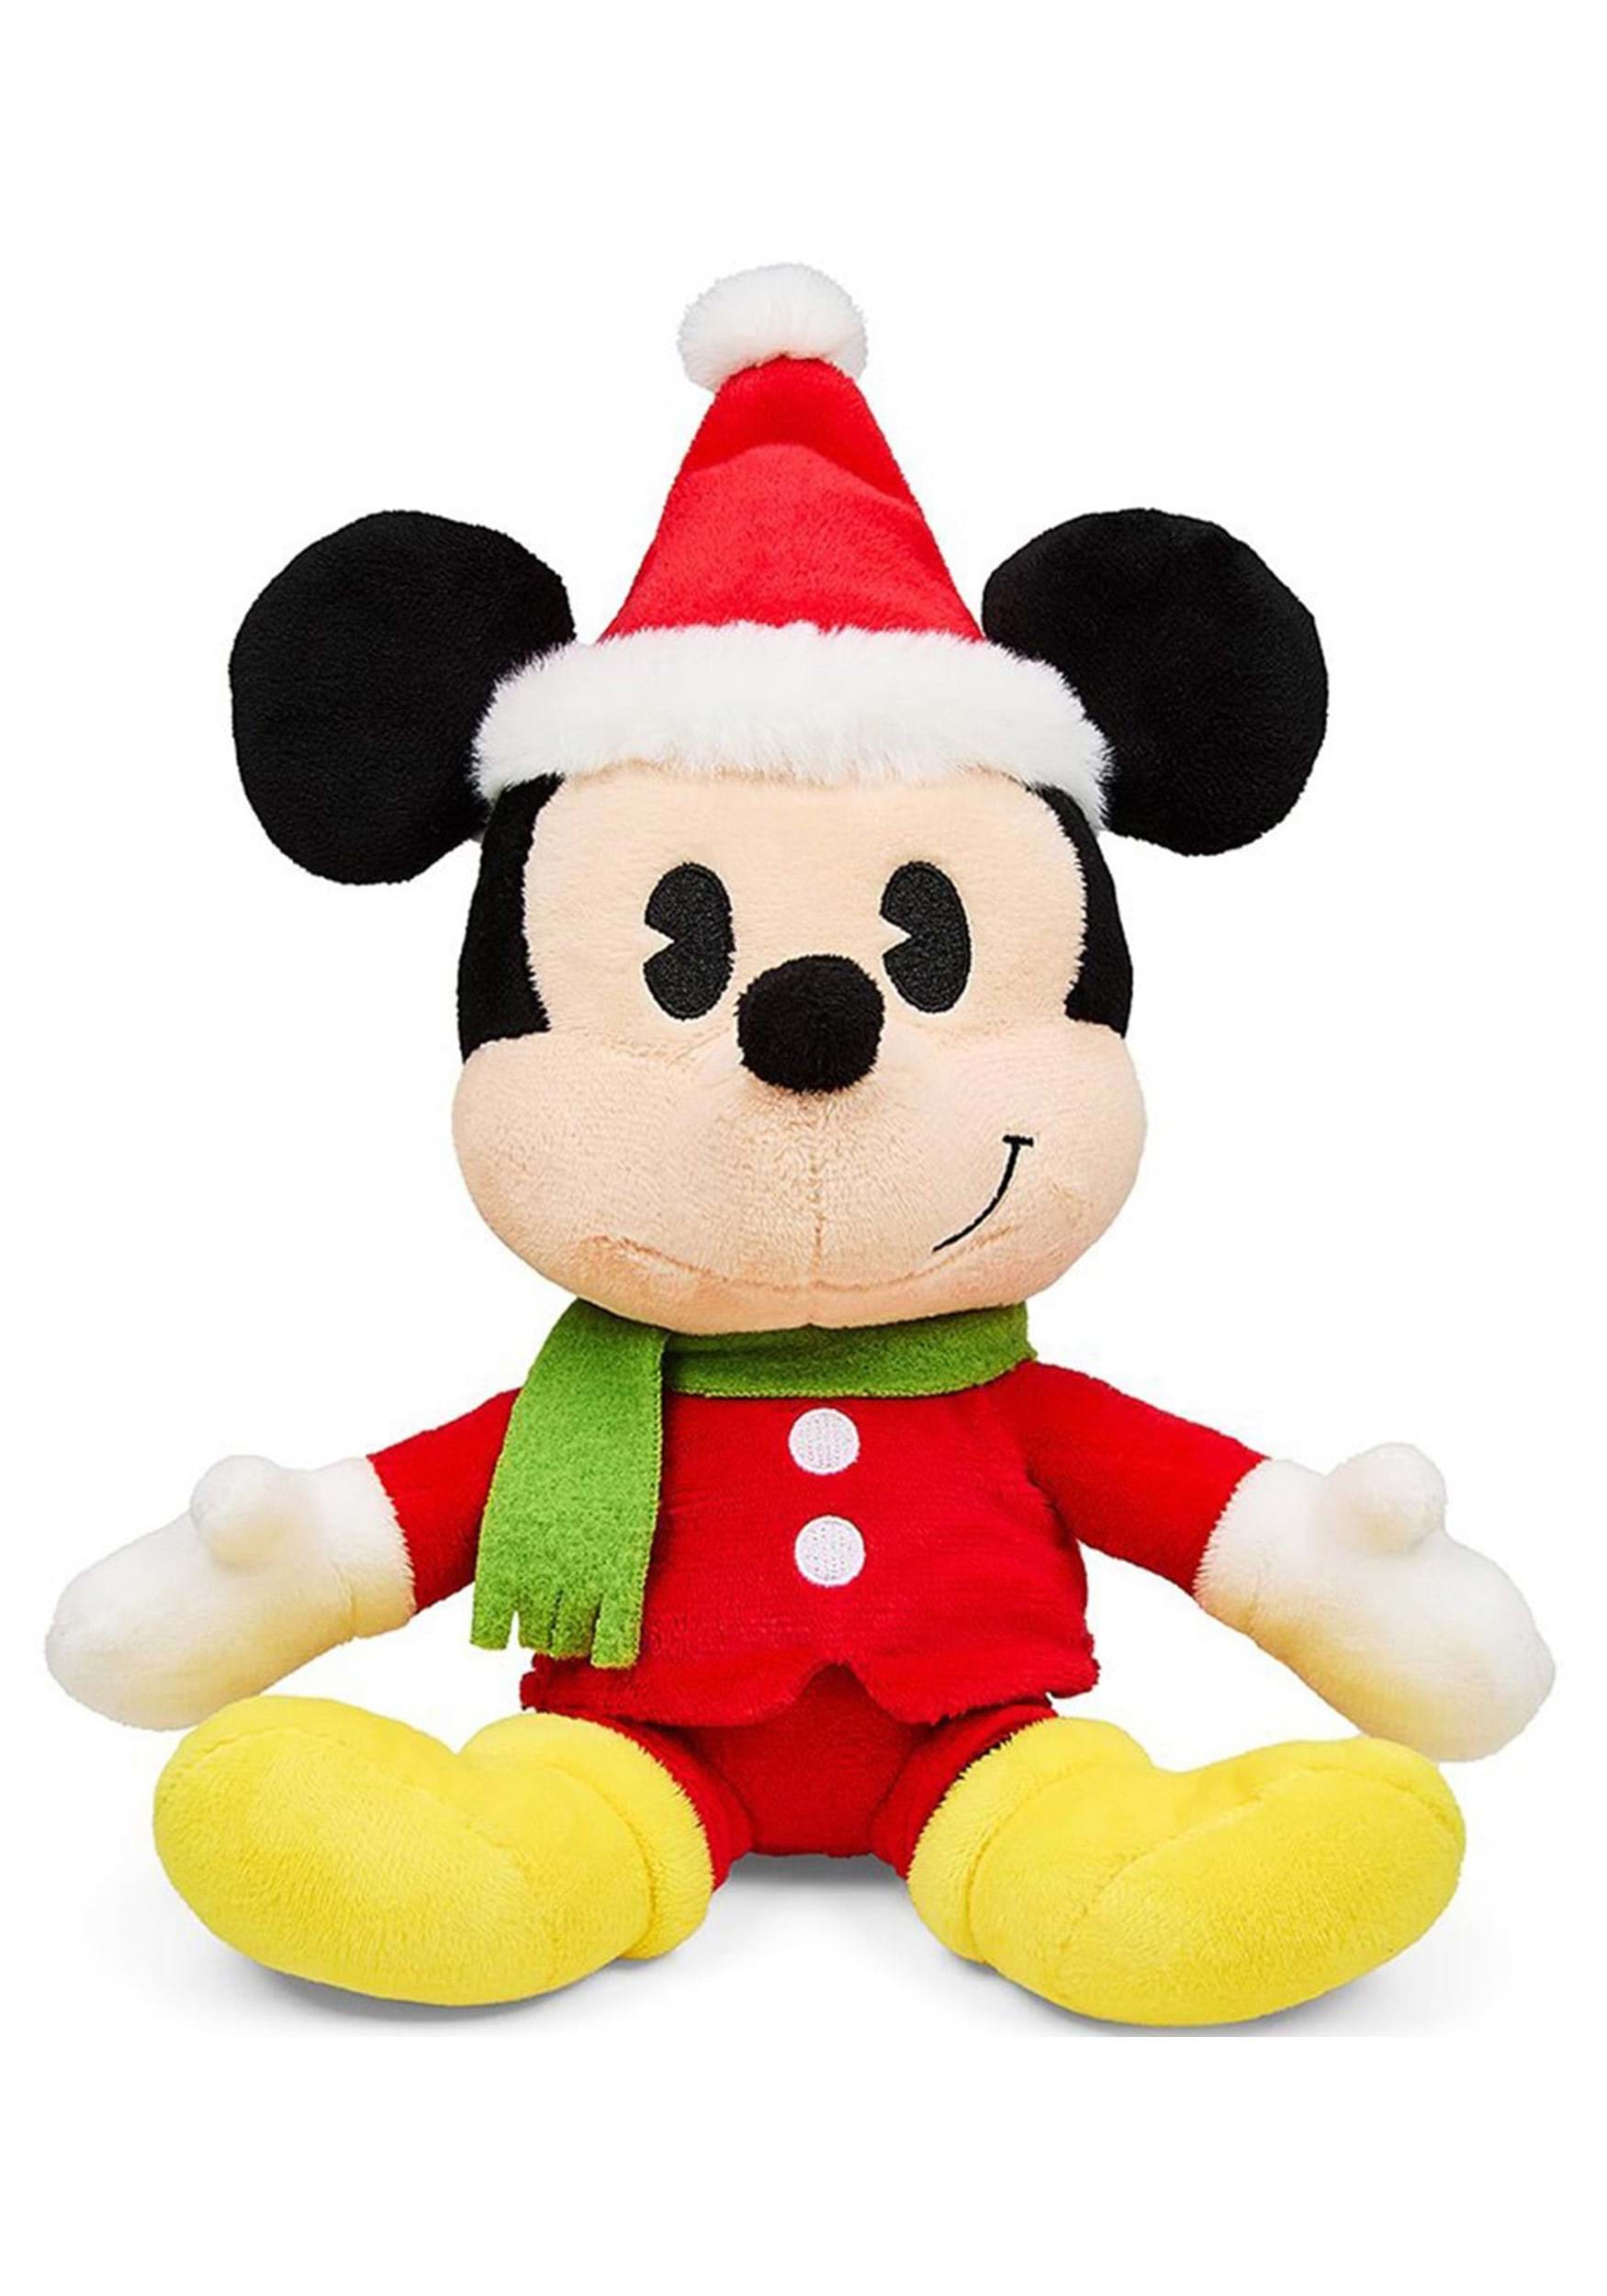 Mickey Mouse Holiday 8" Phunny Plush